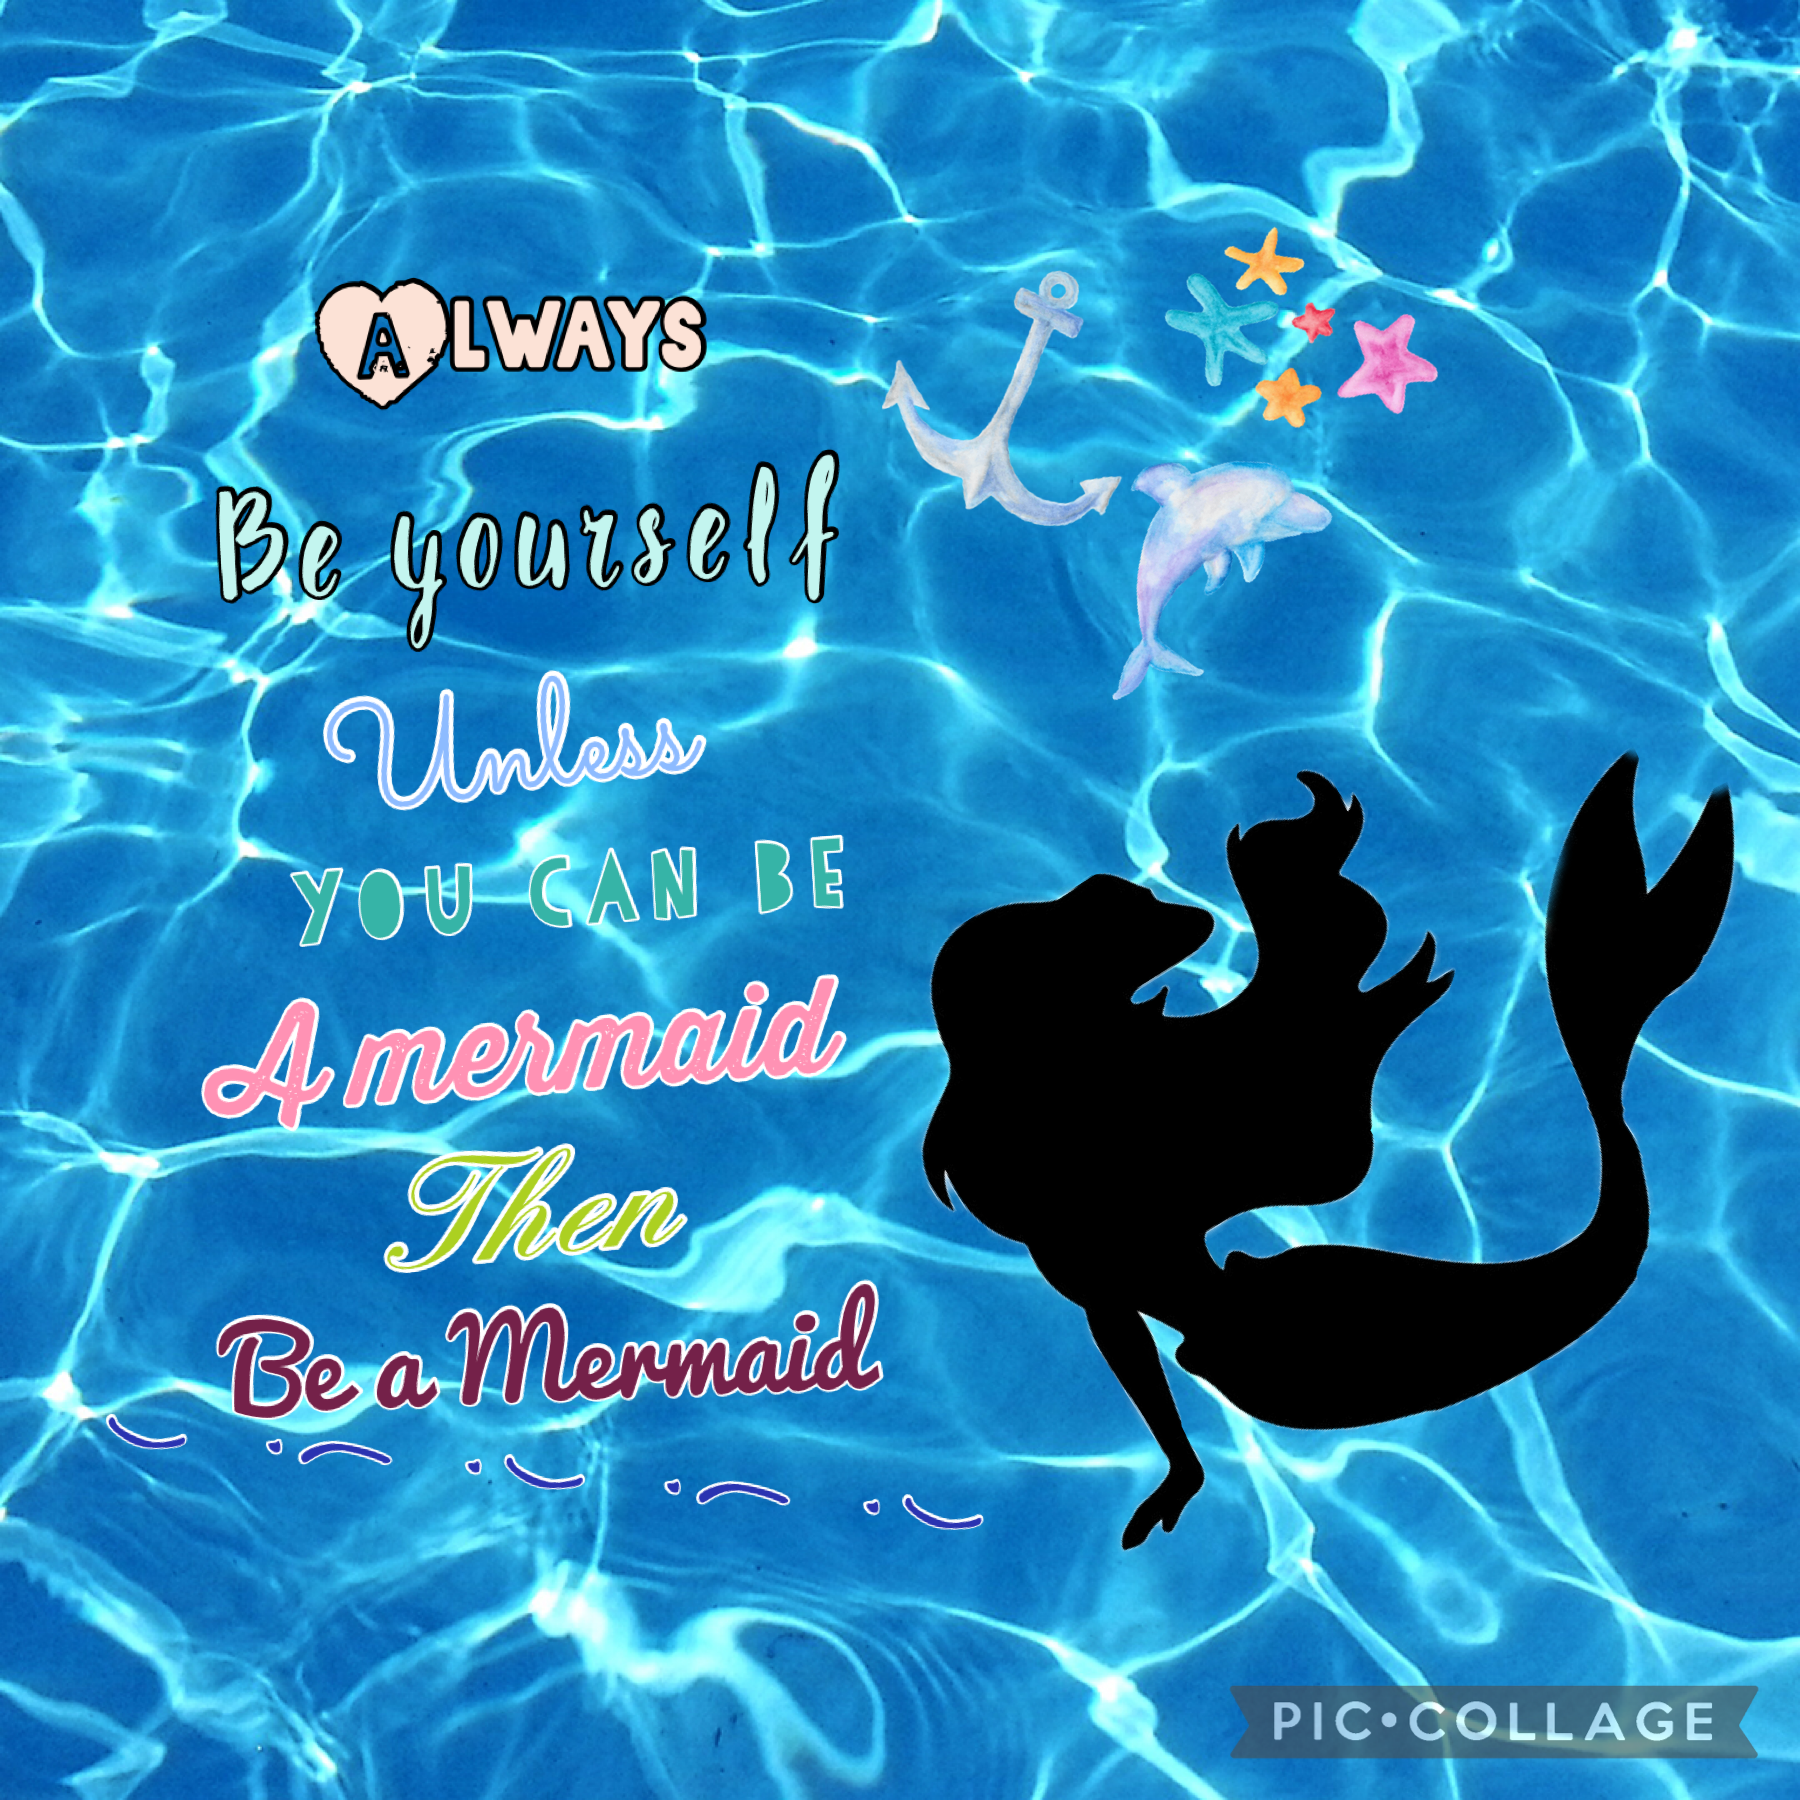 🧜‍♀️Tap🧜‍♀️
Luv them mermaids